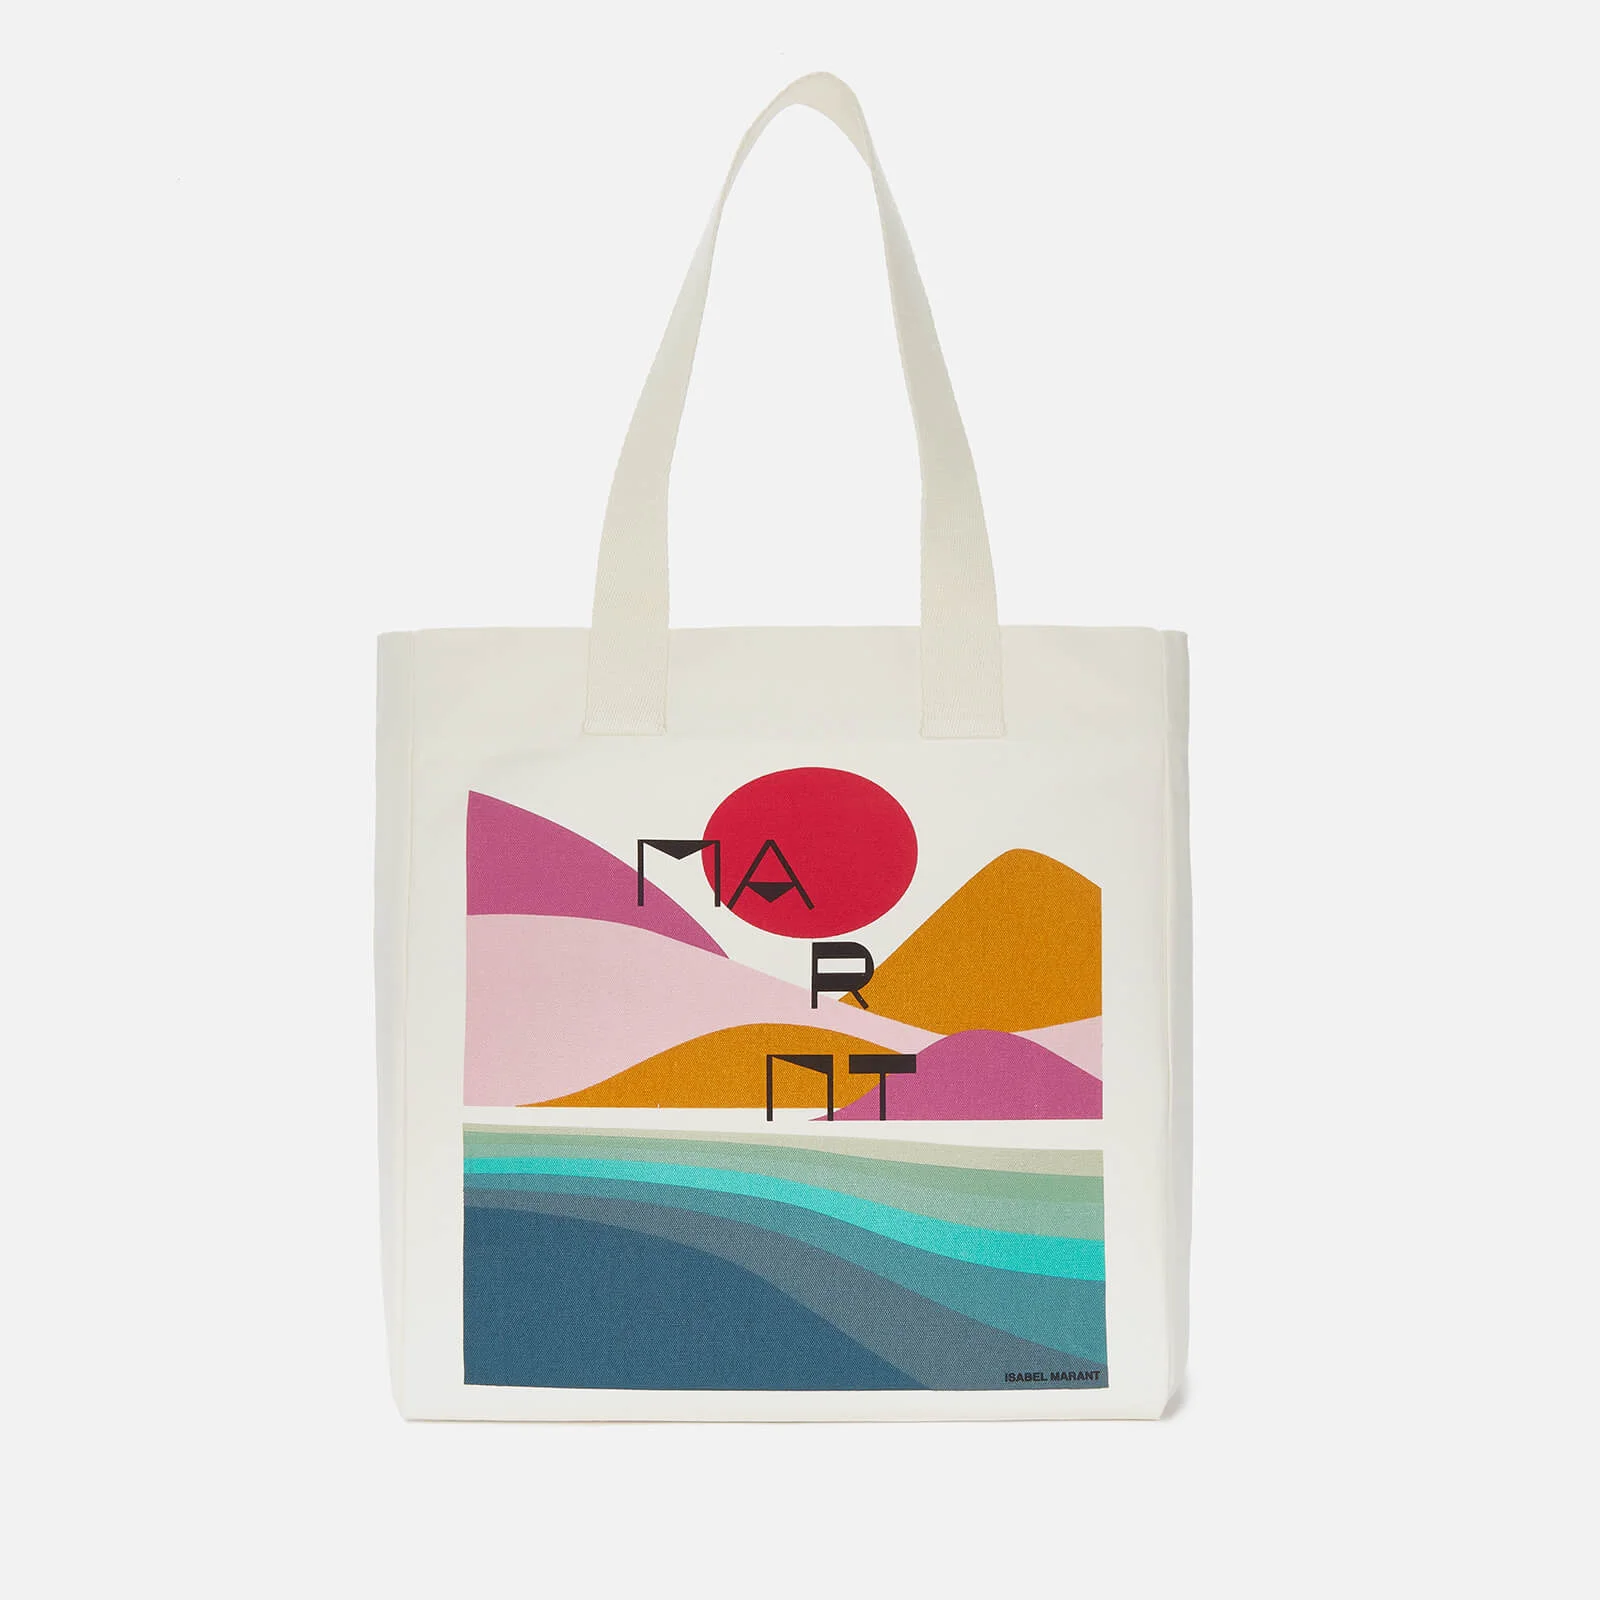 Isabel Marant Women's Graphic Sunset Tote Bag - Ecru Image 1